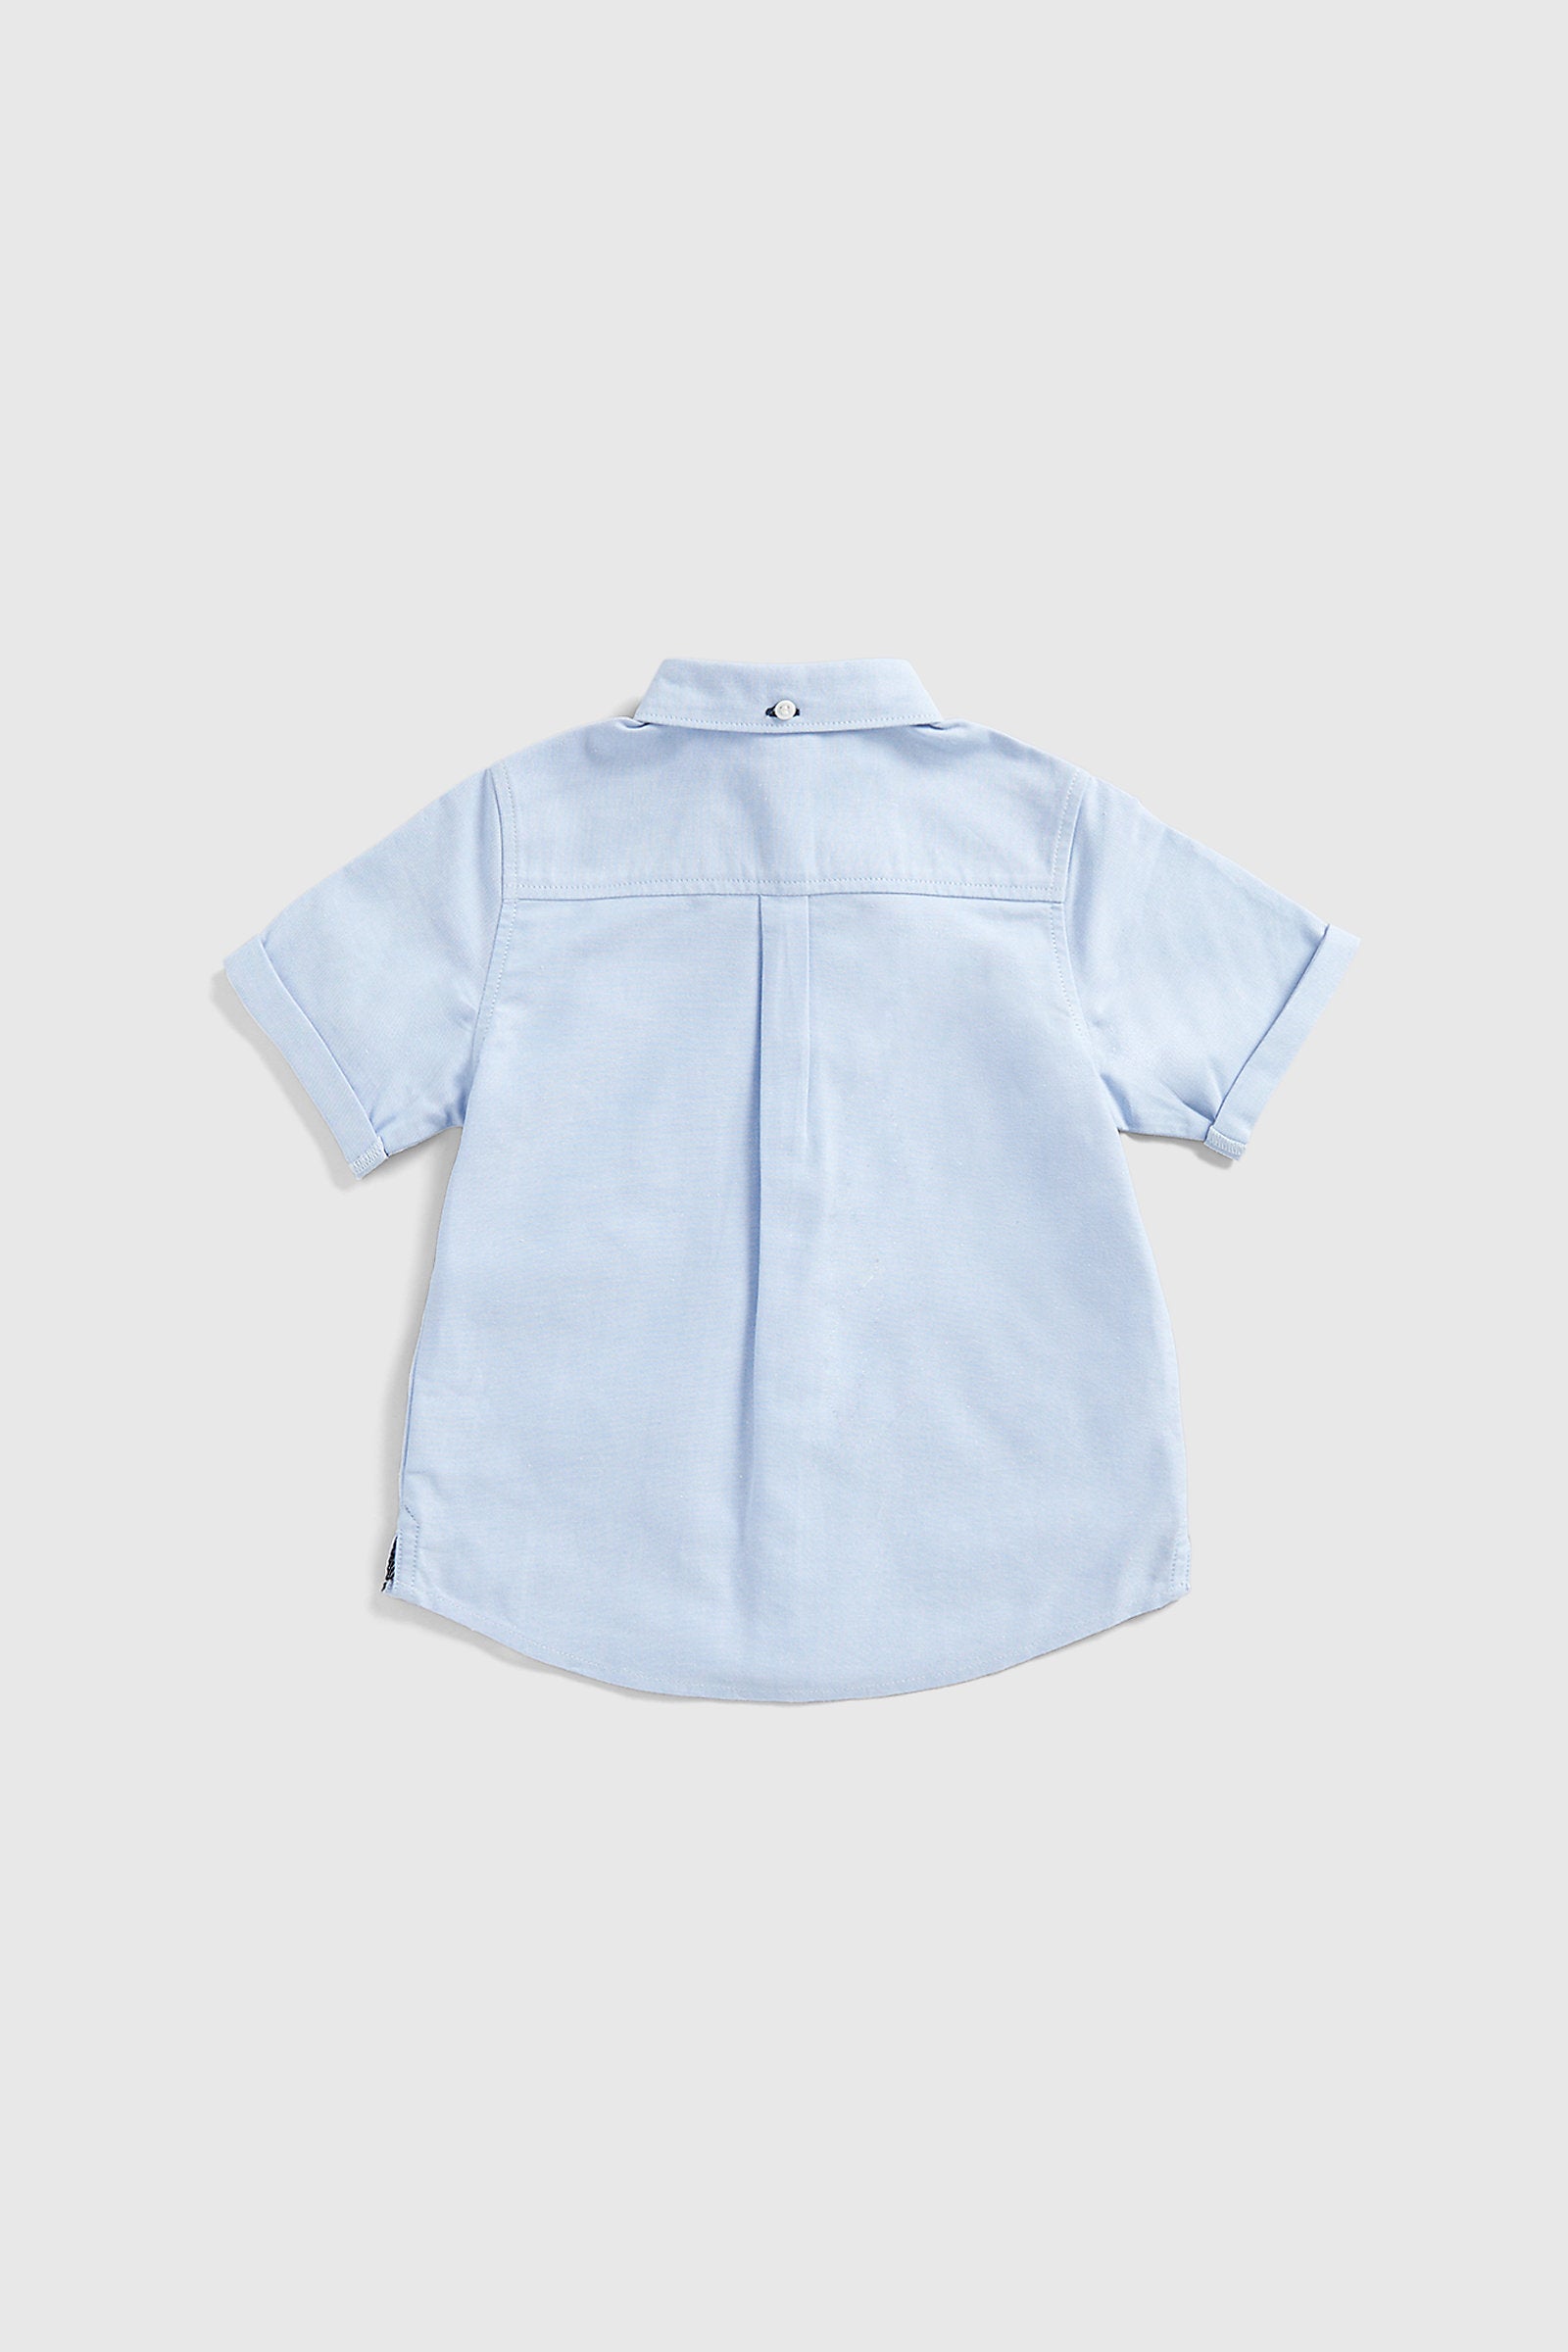 Mothercare Chambray Oxford Shirt